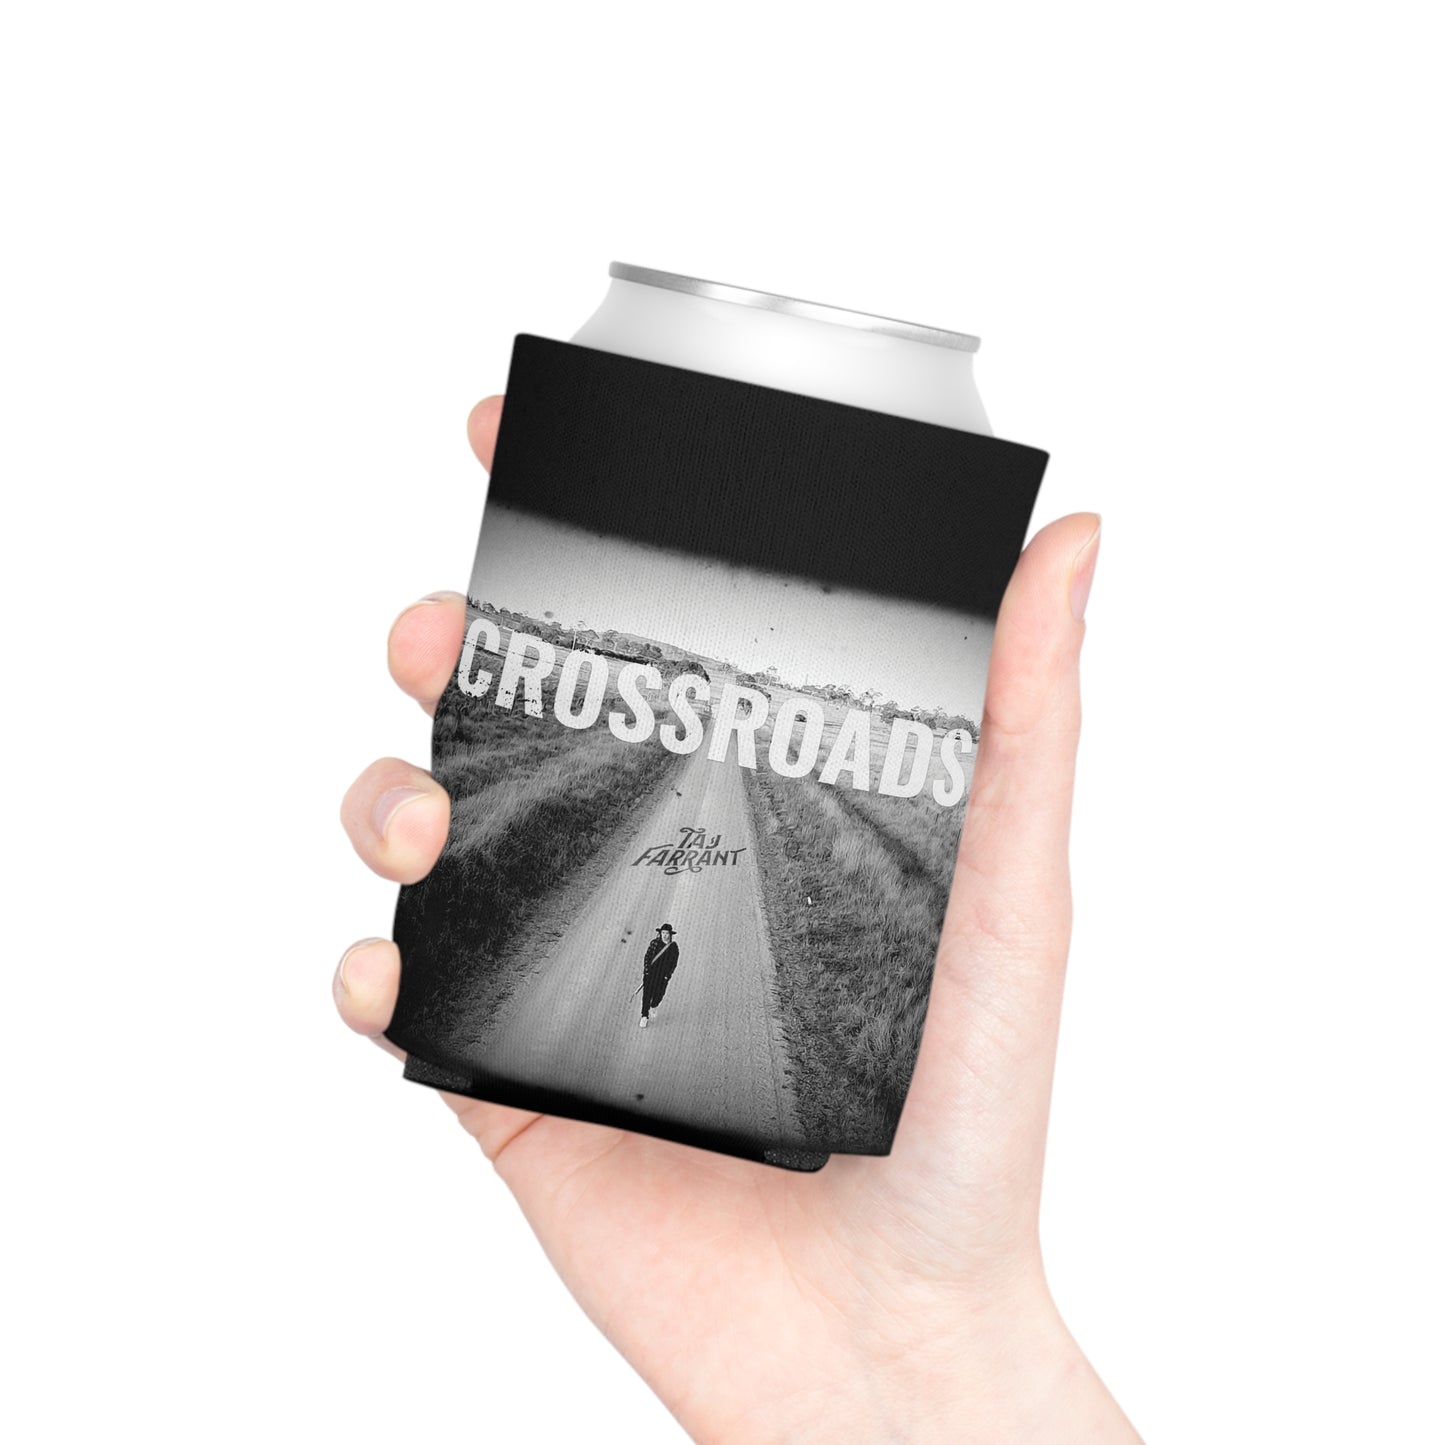 Crossroads Album Art (Cooler)